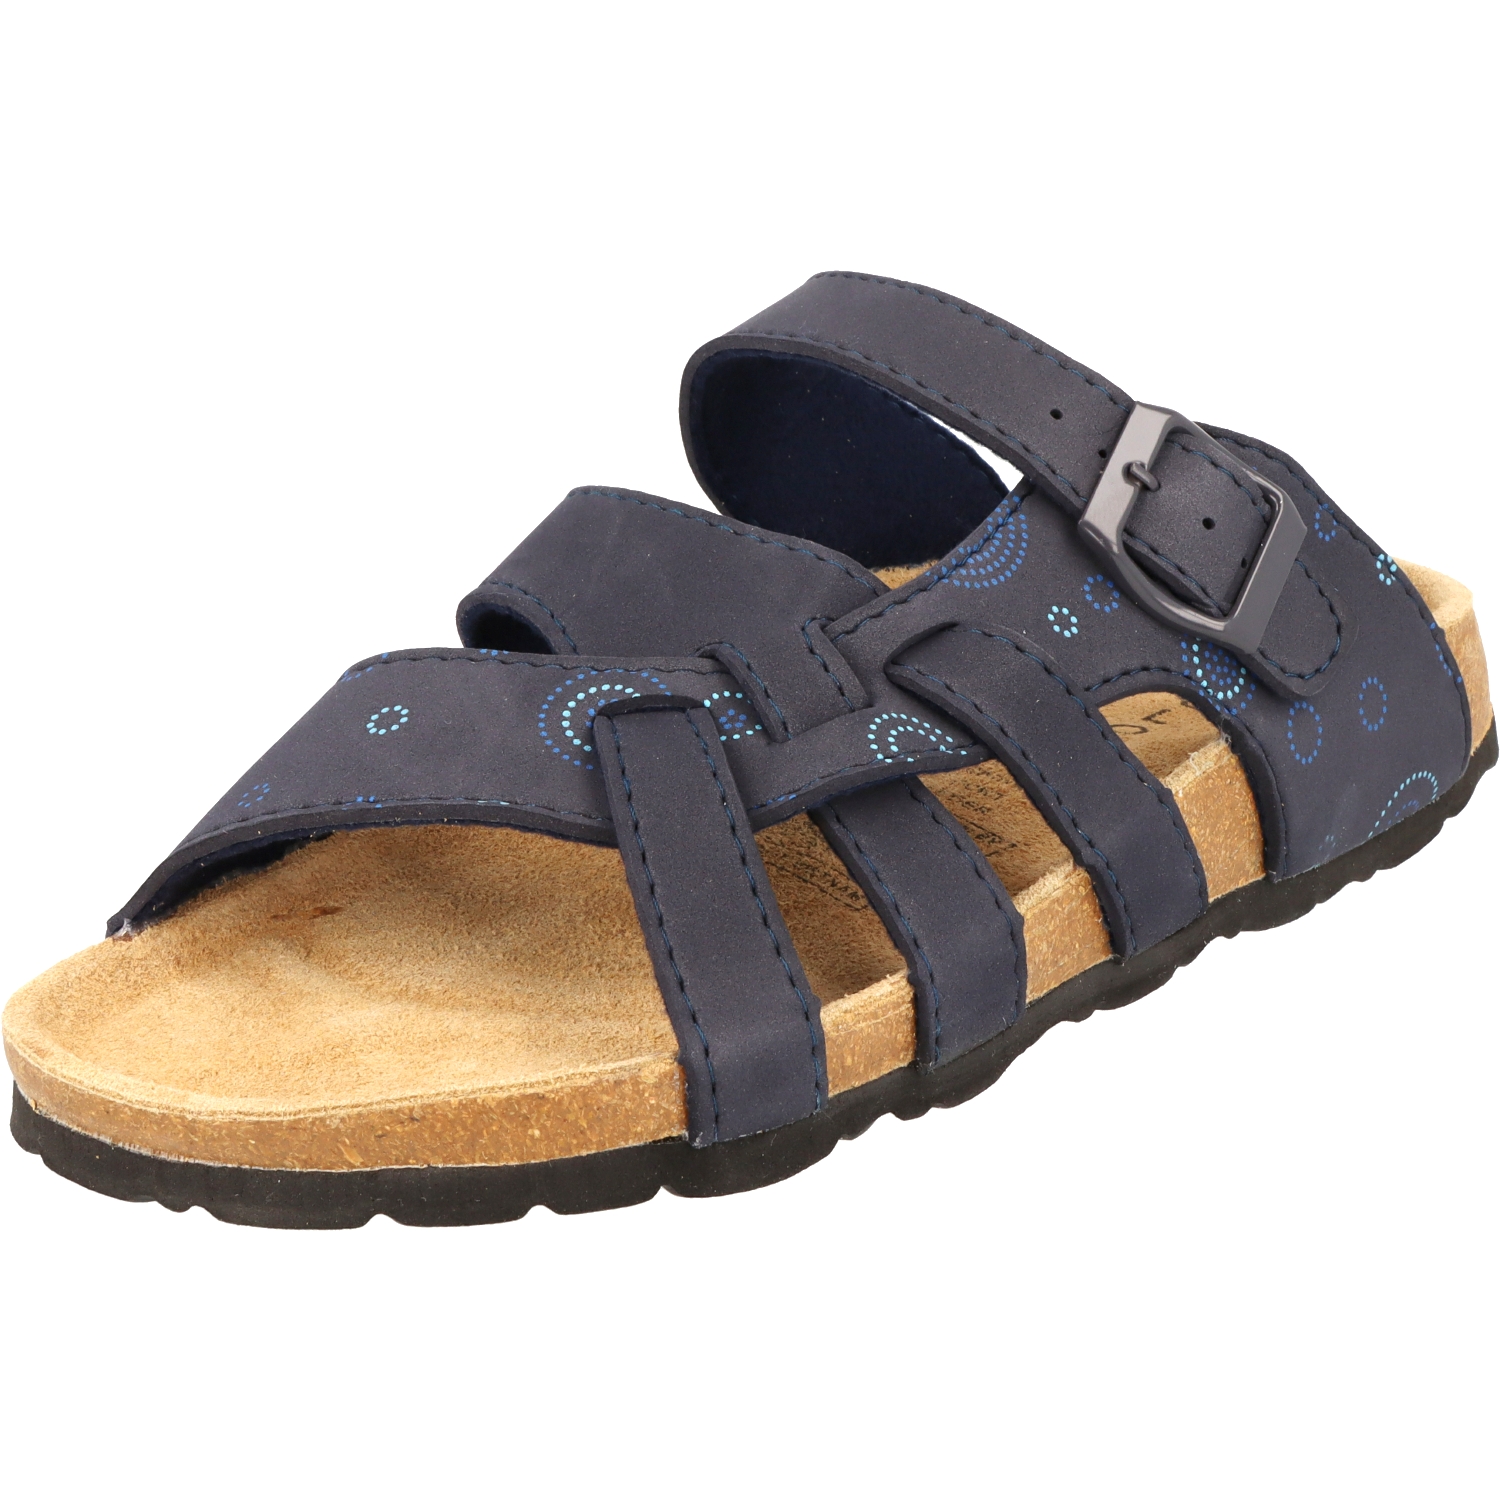 Cloxx Damen Schuhe T67913.40 Pantolette Hausschuhe Sandale Lederfußbett Blau